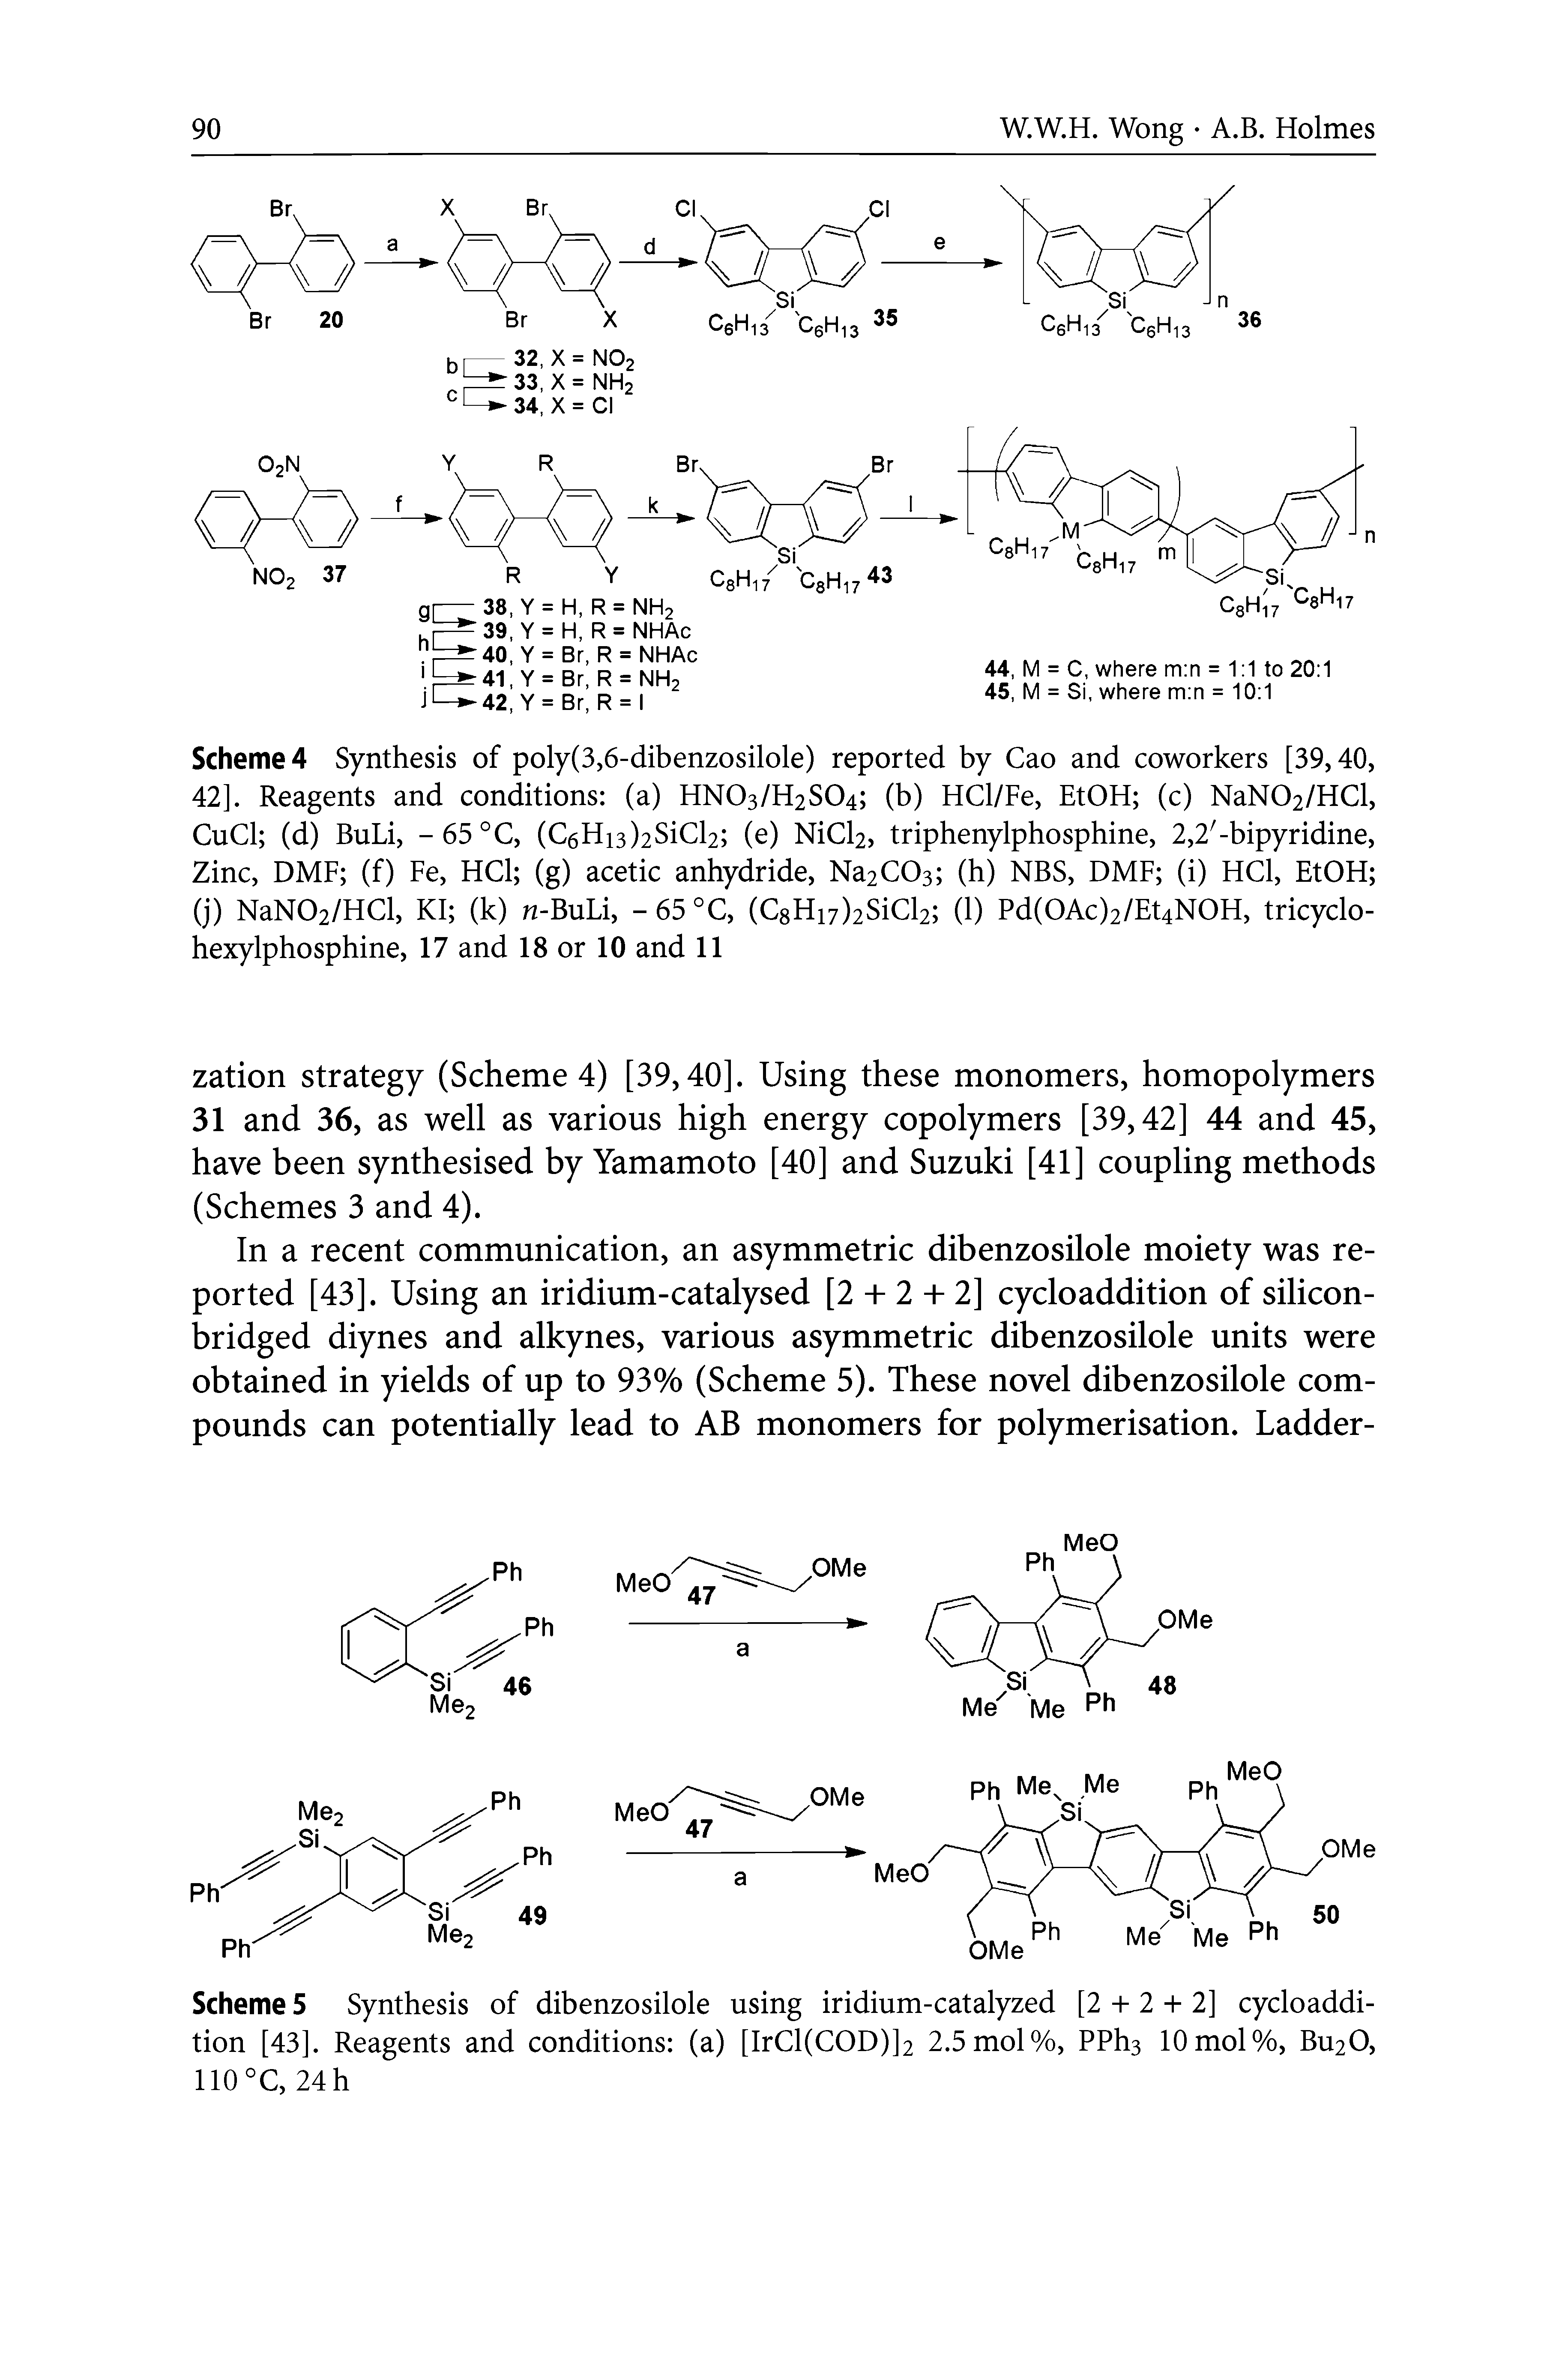 Scheme 5 Synthesis of dibenzosilole using iridium-catalyzed [2 + 2 + 2] cycloaddition [43]. Reagents and conditions (a) [IrCl(COD)]2 2.5 mol%, PPh3 10mol%, Bu20, 110 °C, 24 h...